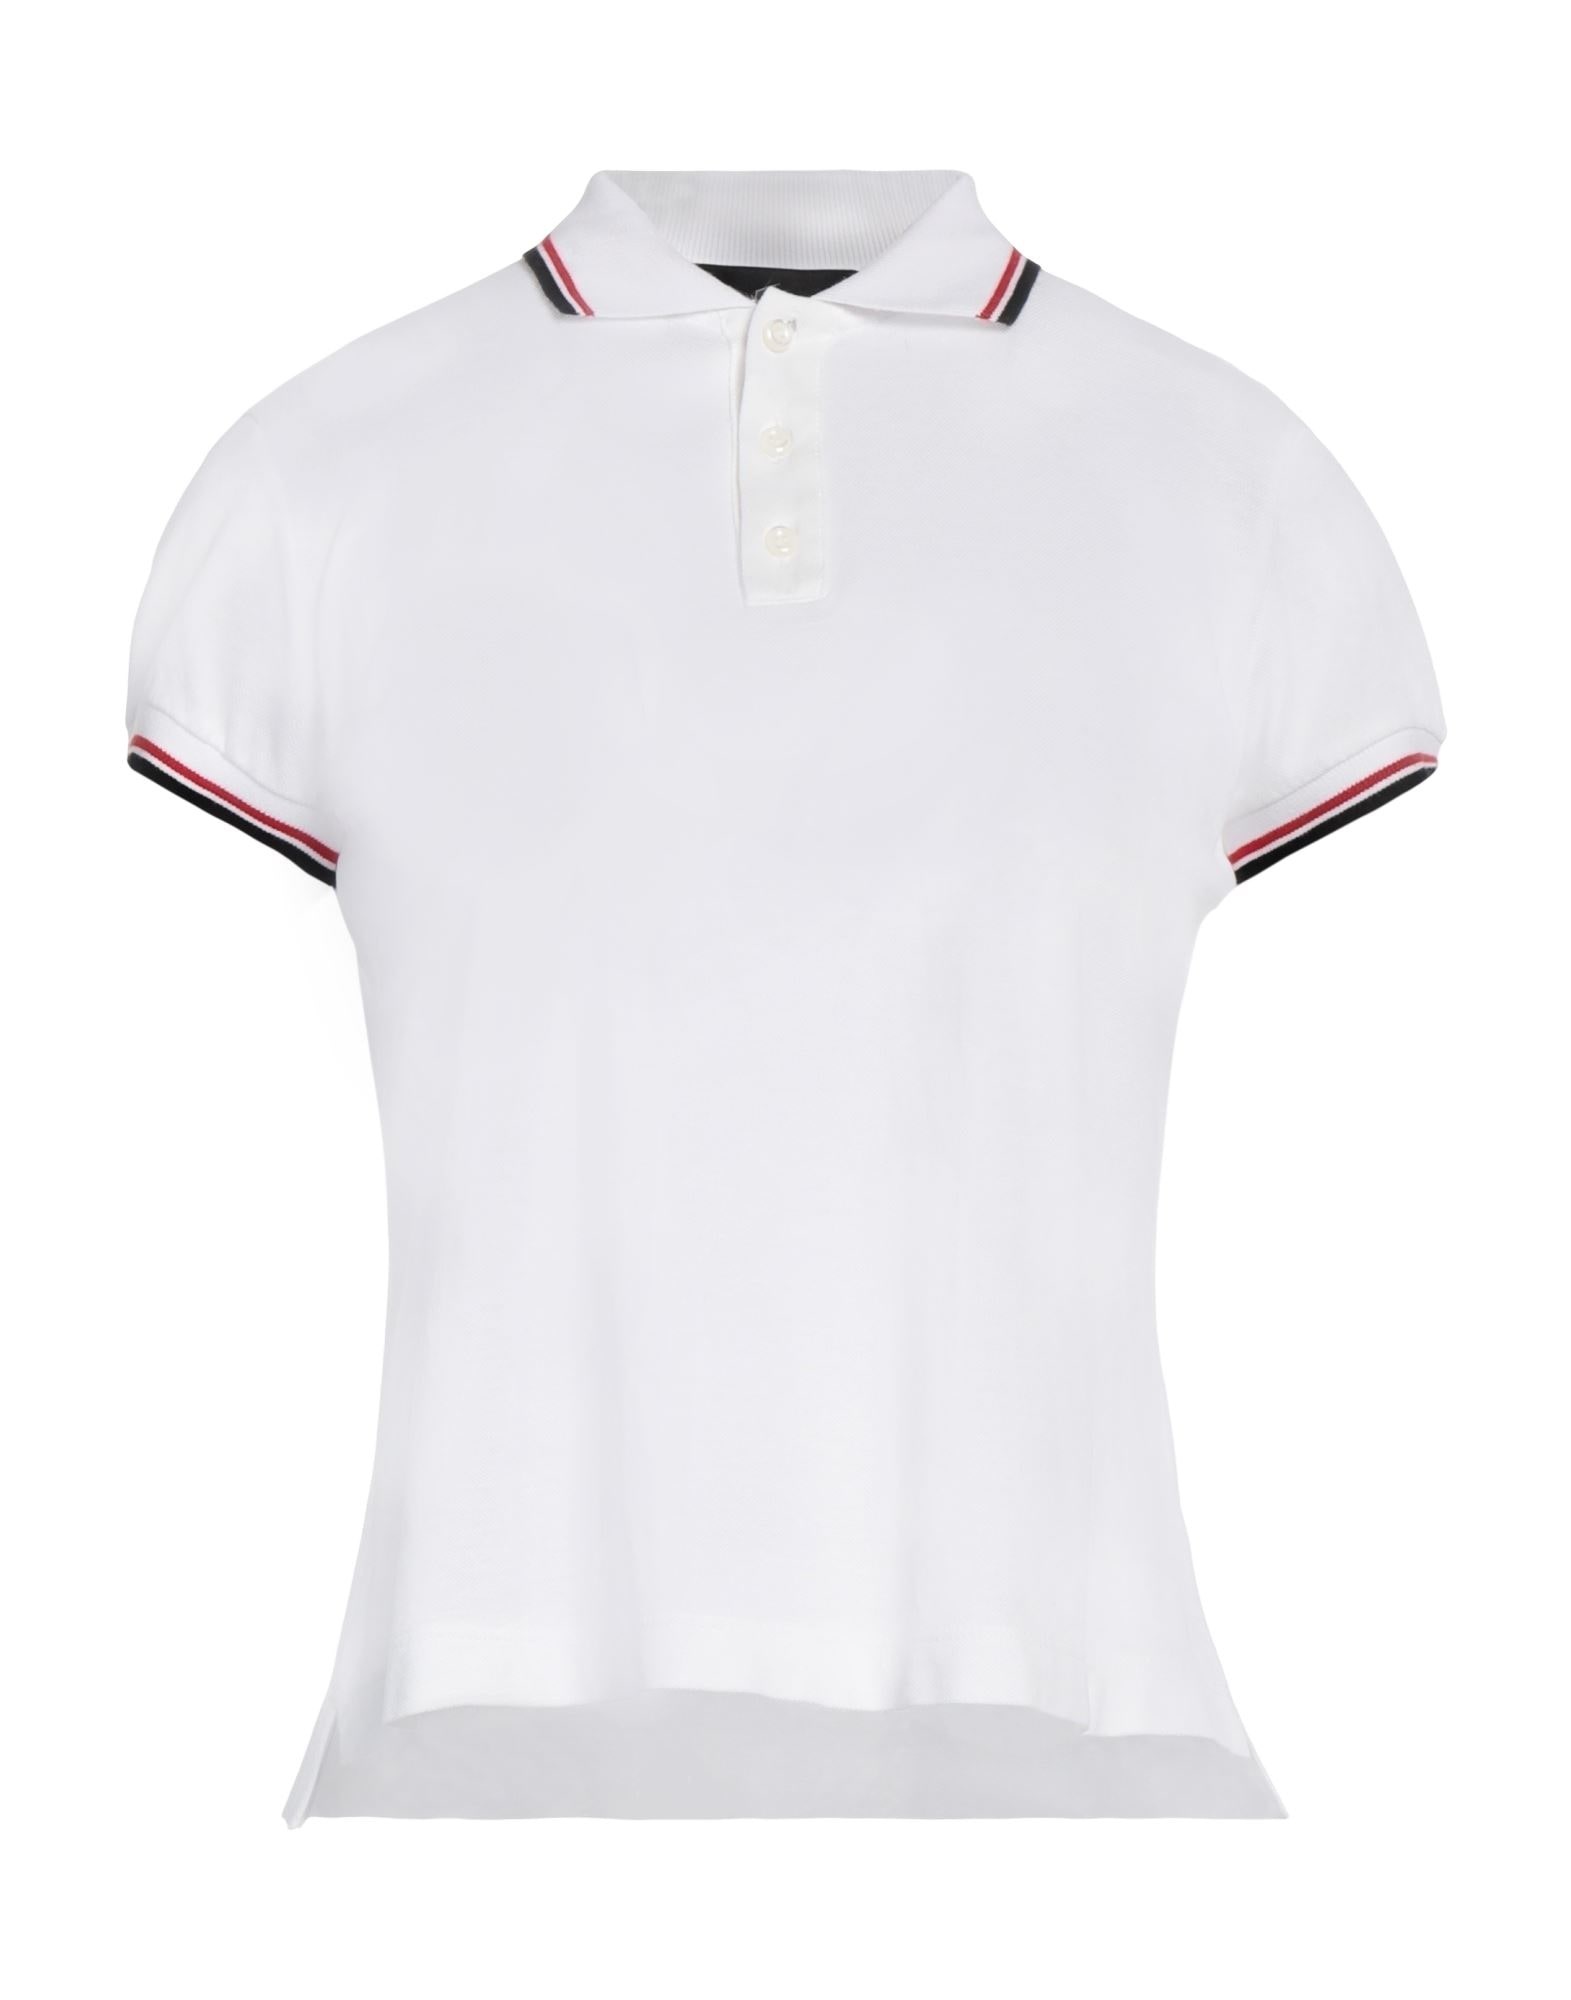 White Women's Polo Shirt - 1